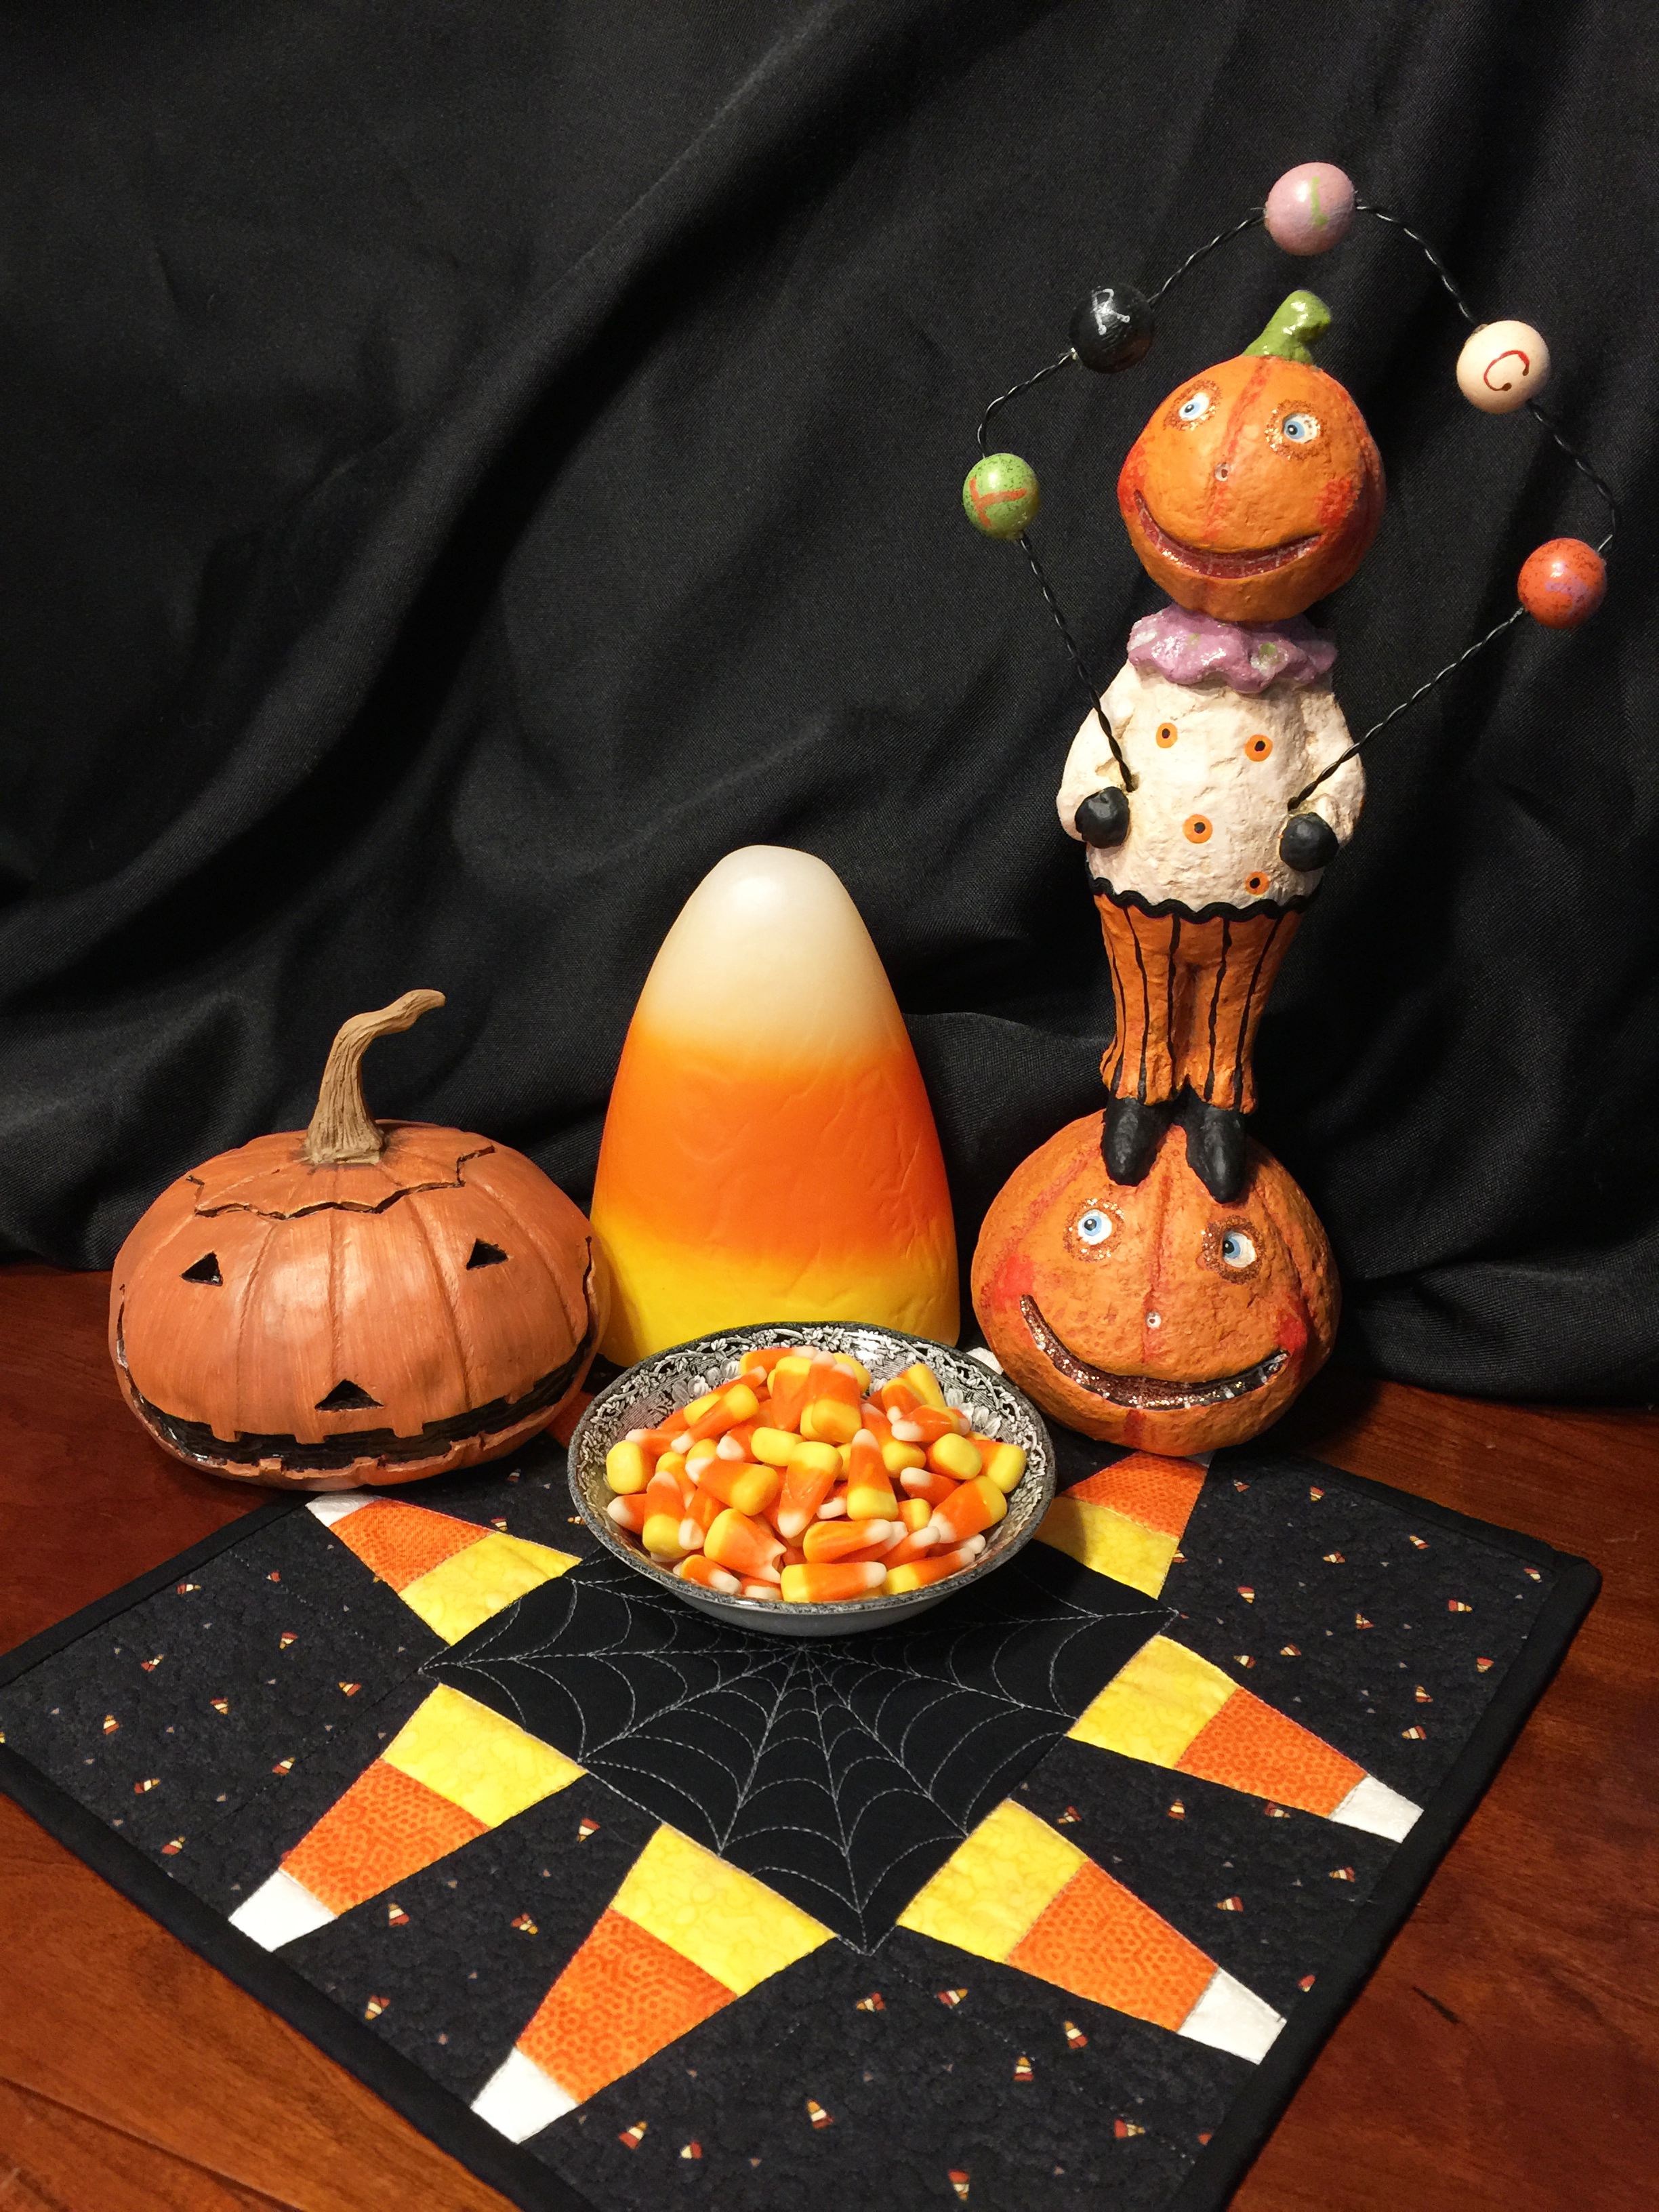 5 X 5 Candy Corn String Art Kit DIY Adult Teen Halloween